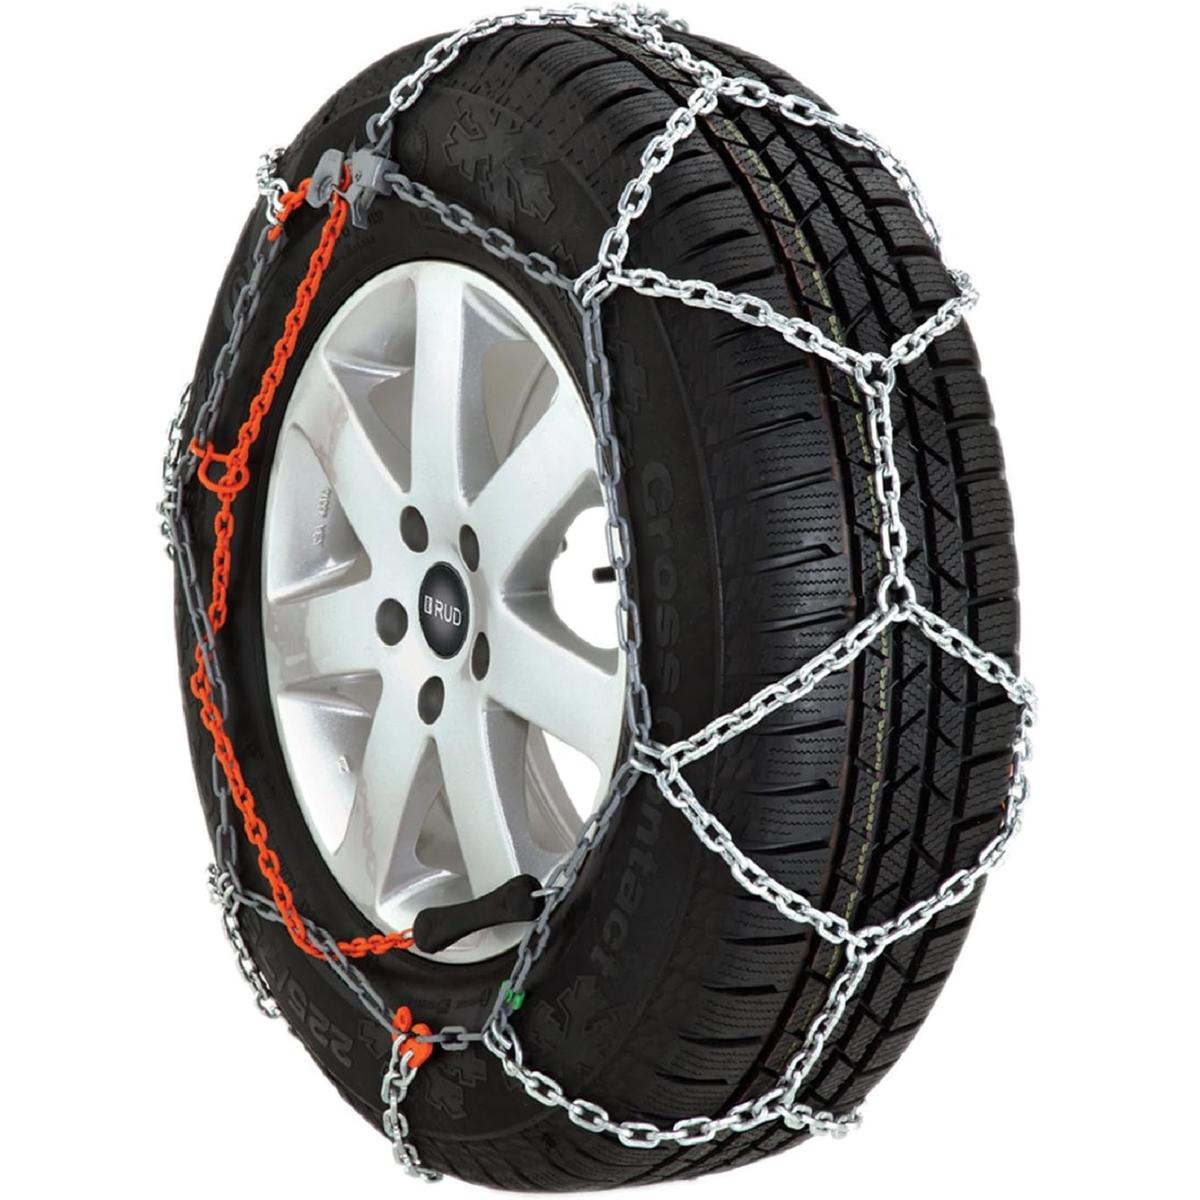 Grip 185/55R14 Passenger Vehicle Tire Chains